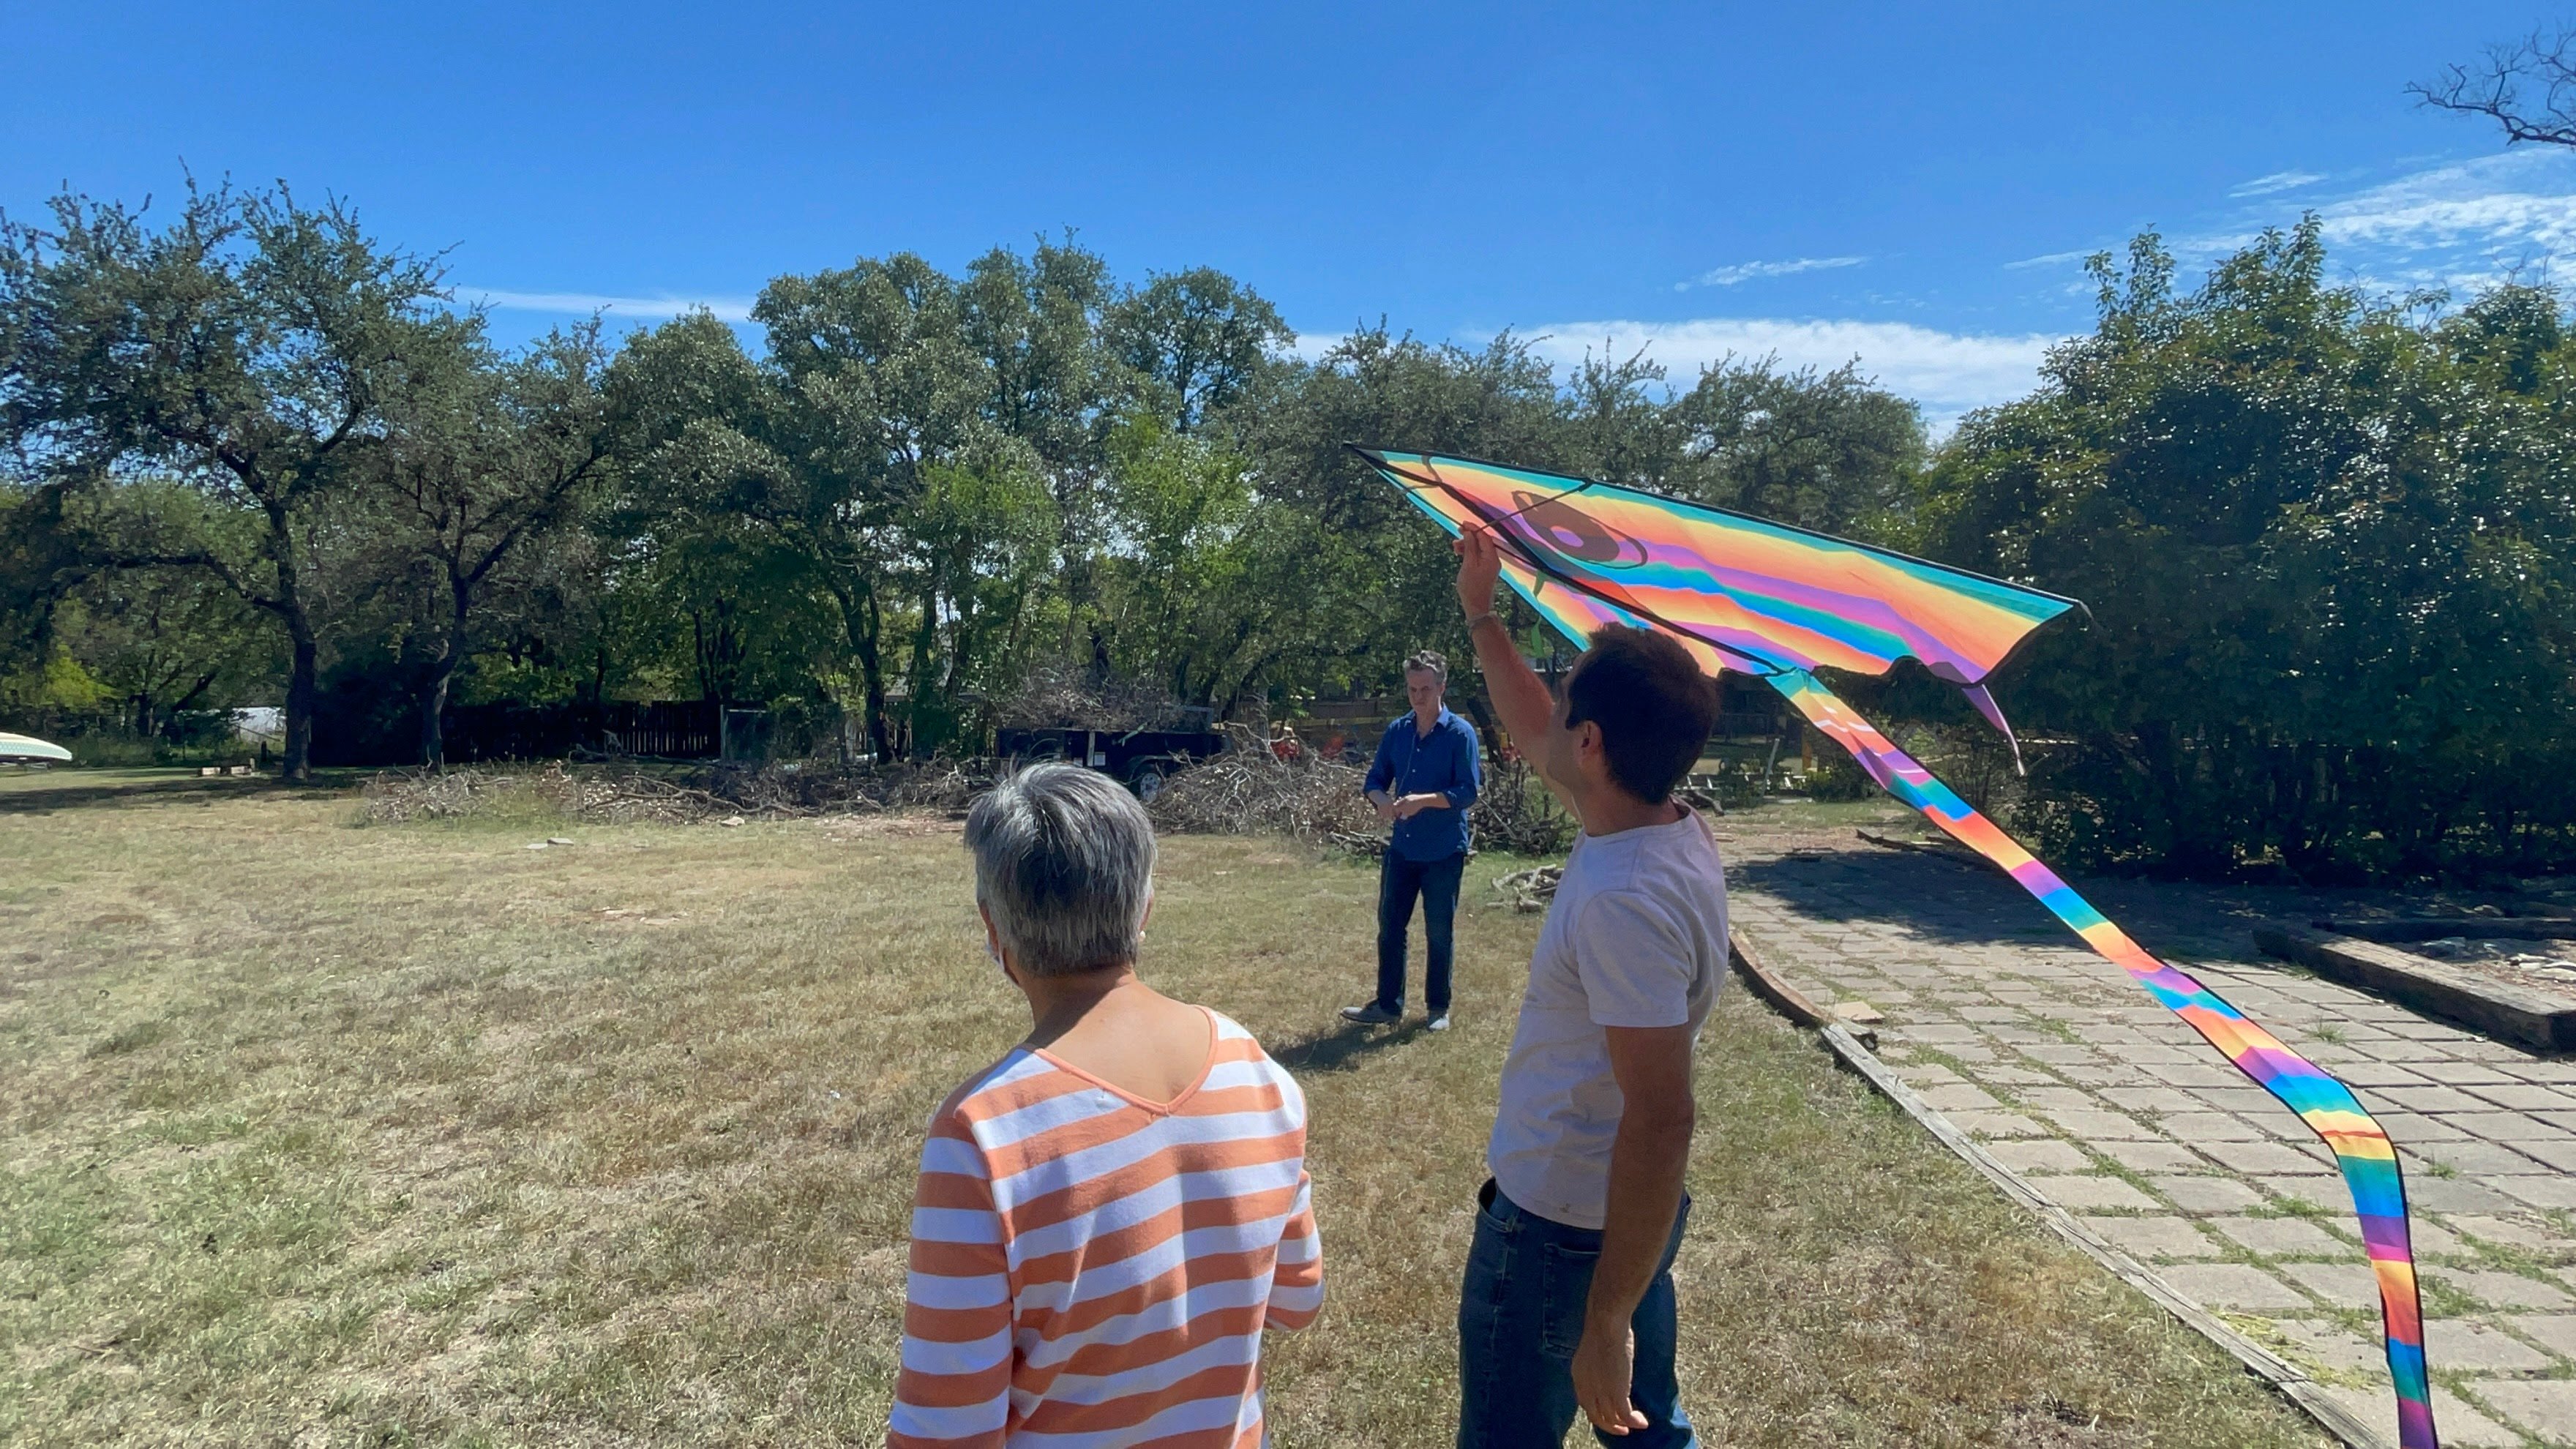 GivePulse team members flying a kite in an open grassy field